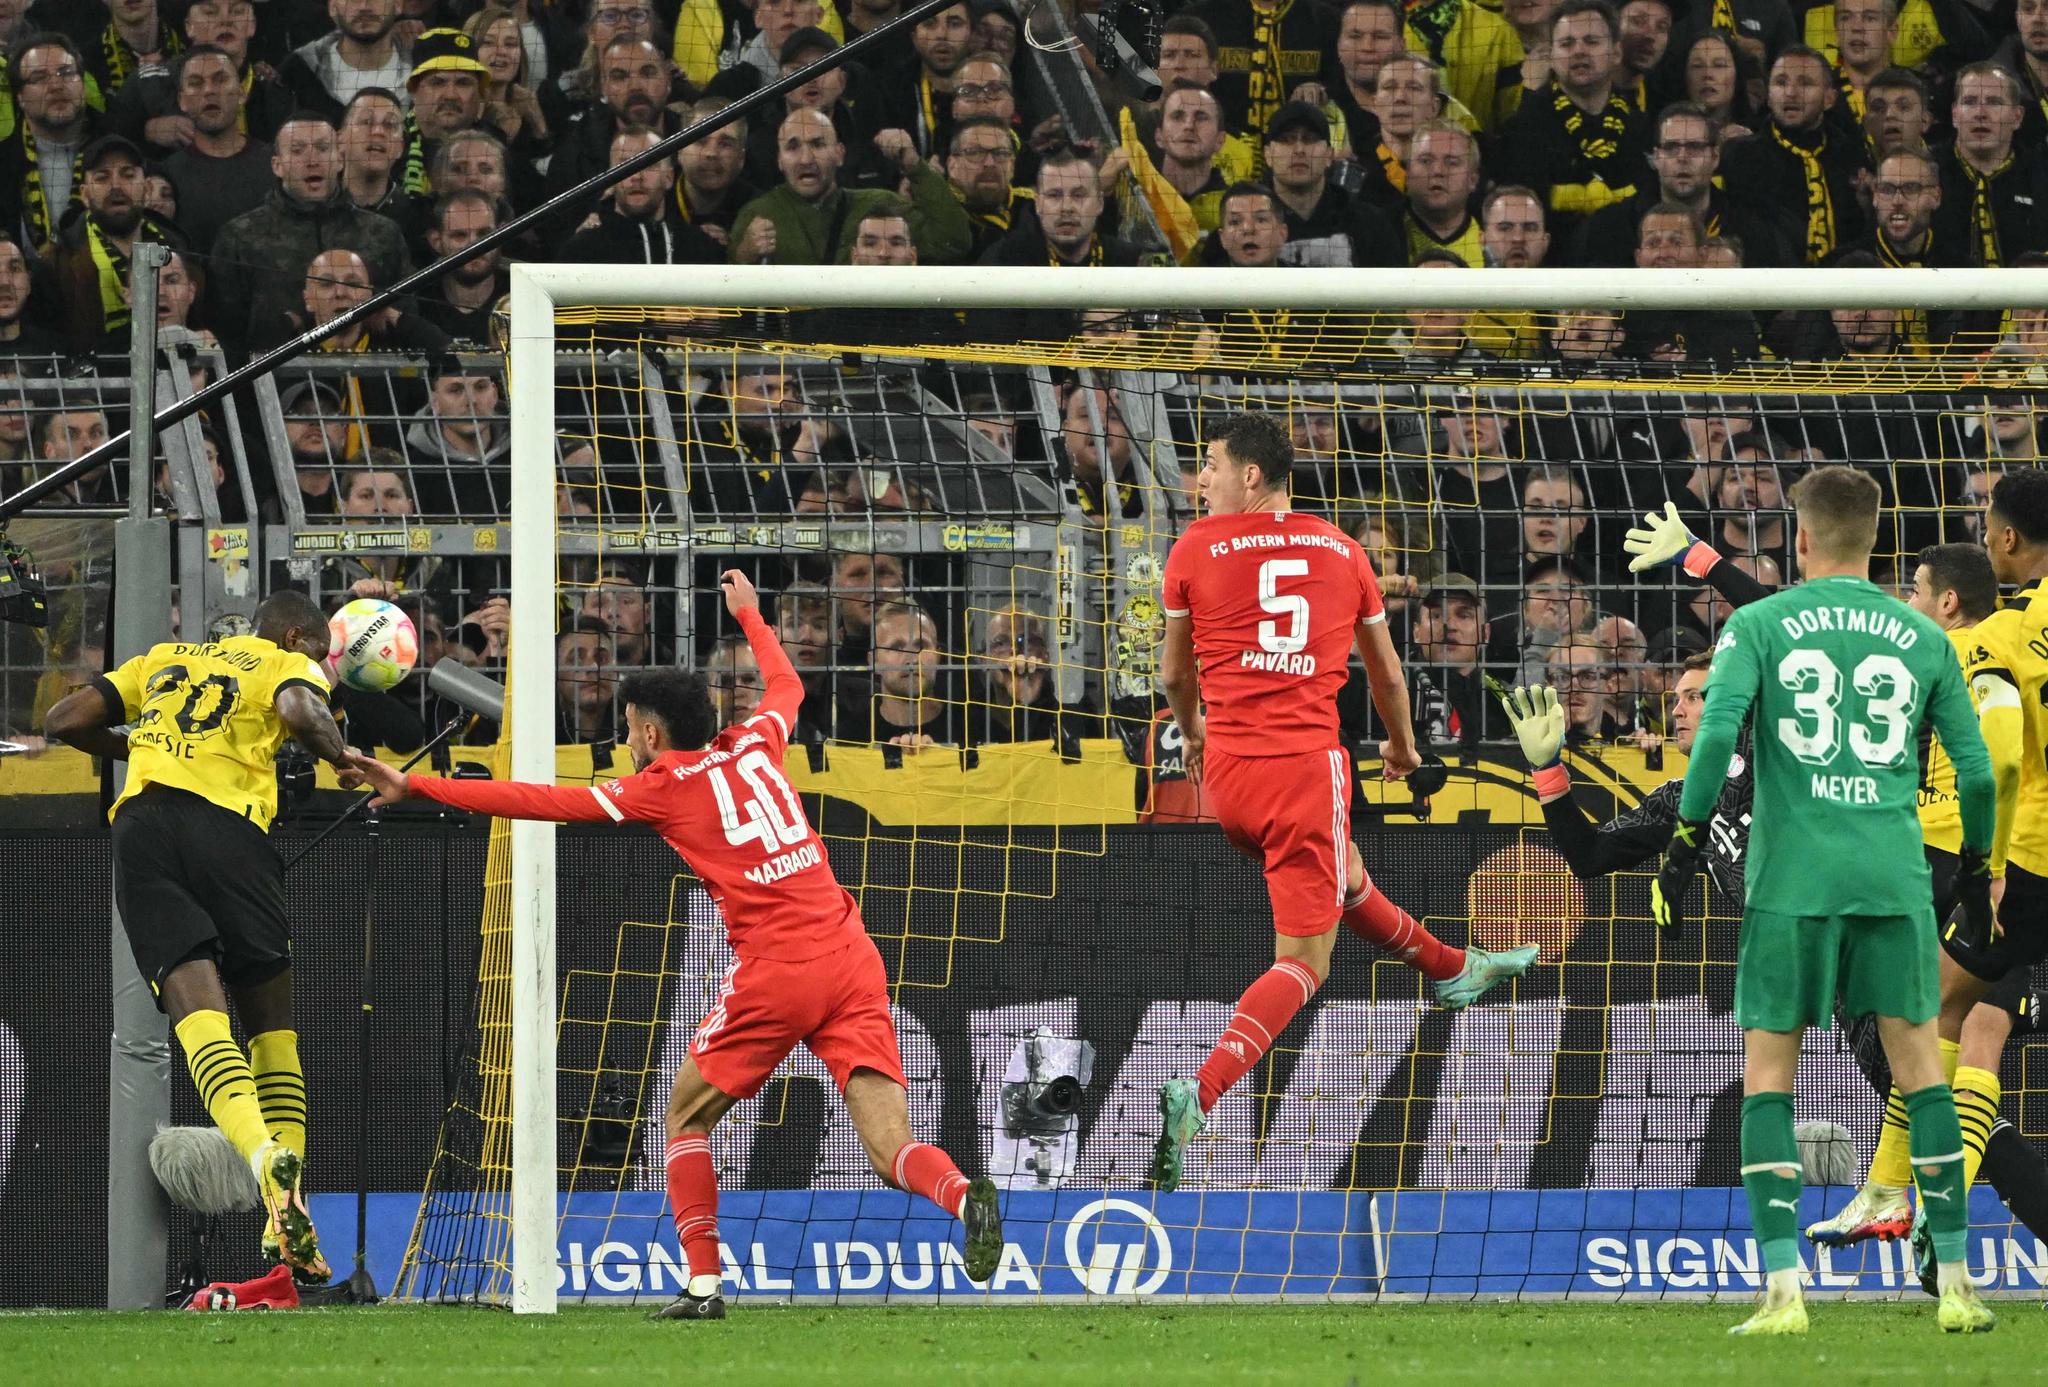 Borussia Dortmund ends a terrible losing streak